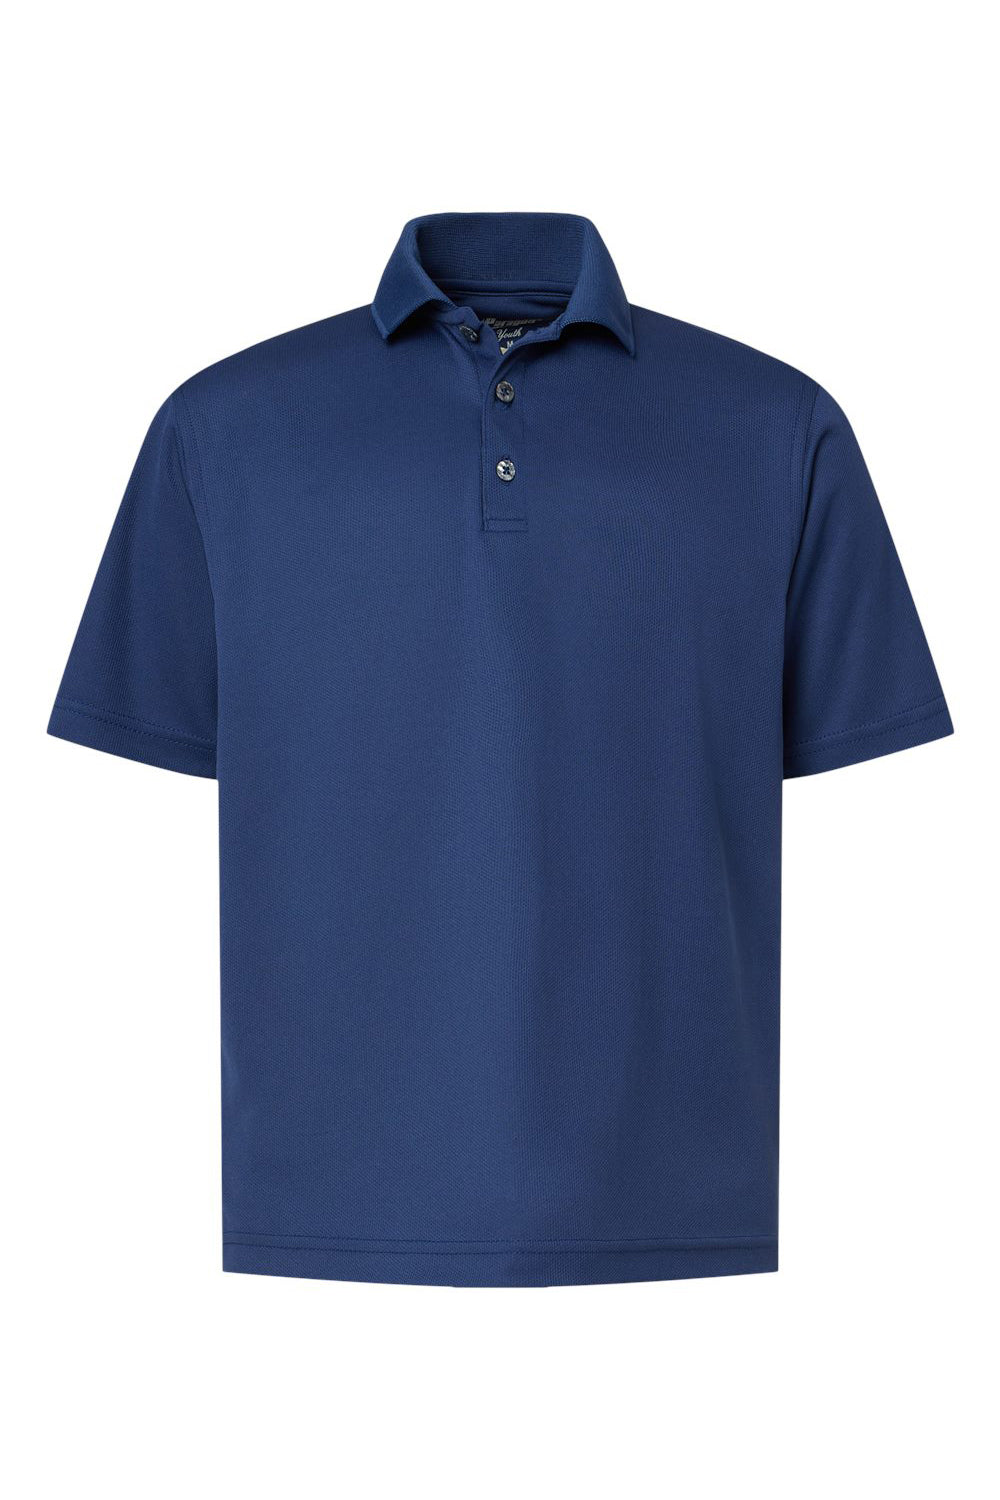 Paragon 108Y Youth Saratoga Performance Mini Mesh Short Sleeve Polo Shirt Navy Blue Flat Front